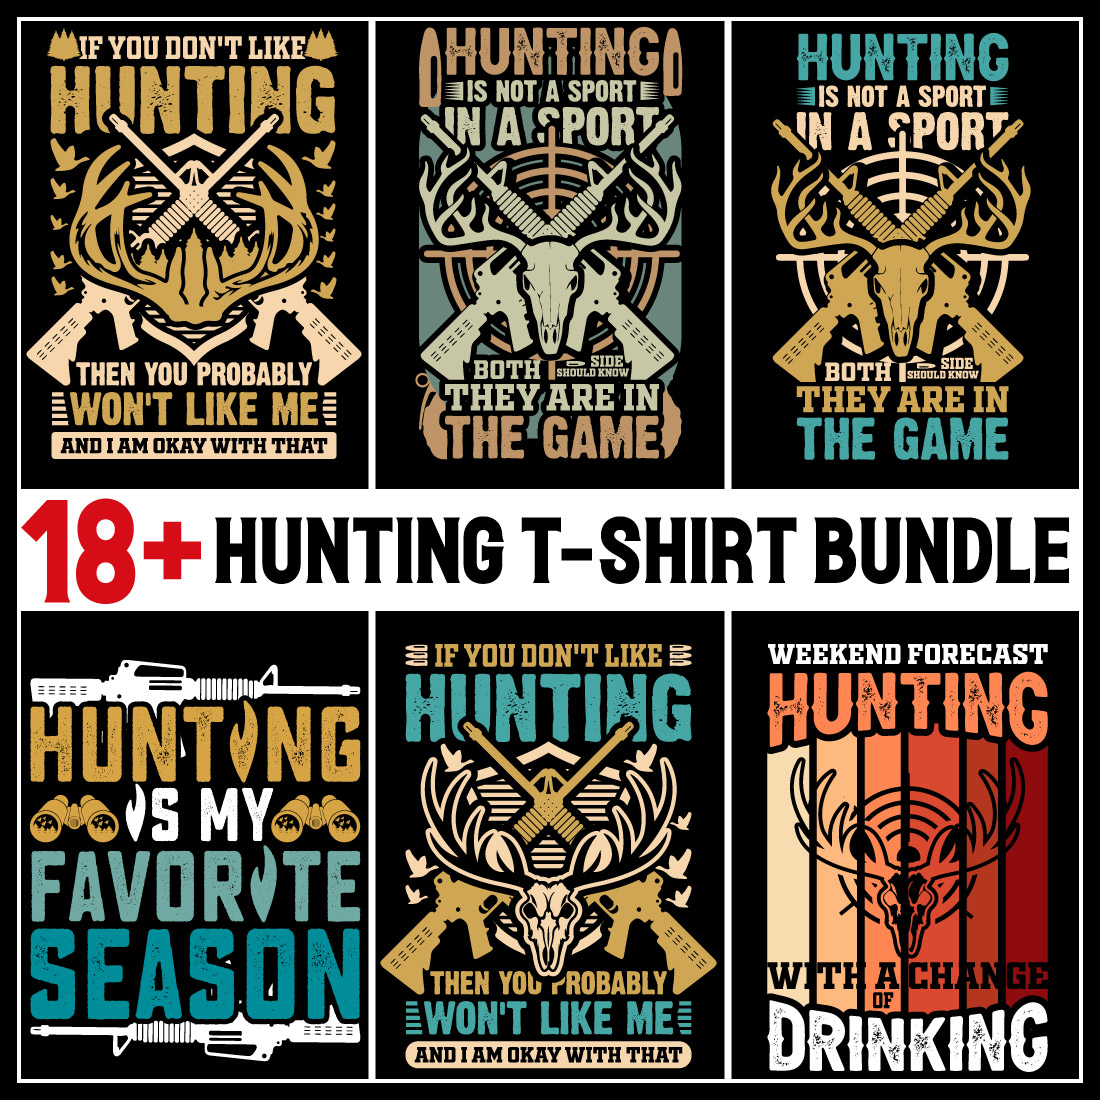 Hunting T-shirt- Hunting Shirts- Hunter retro vintage deer hunting t-shirt design- Deer hunting t shirt design cover image.